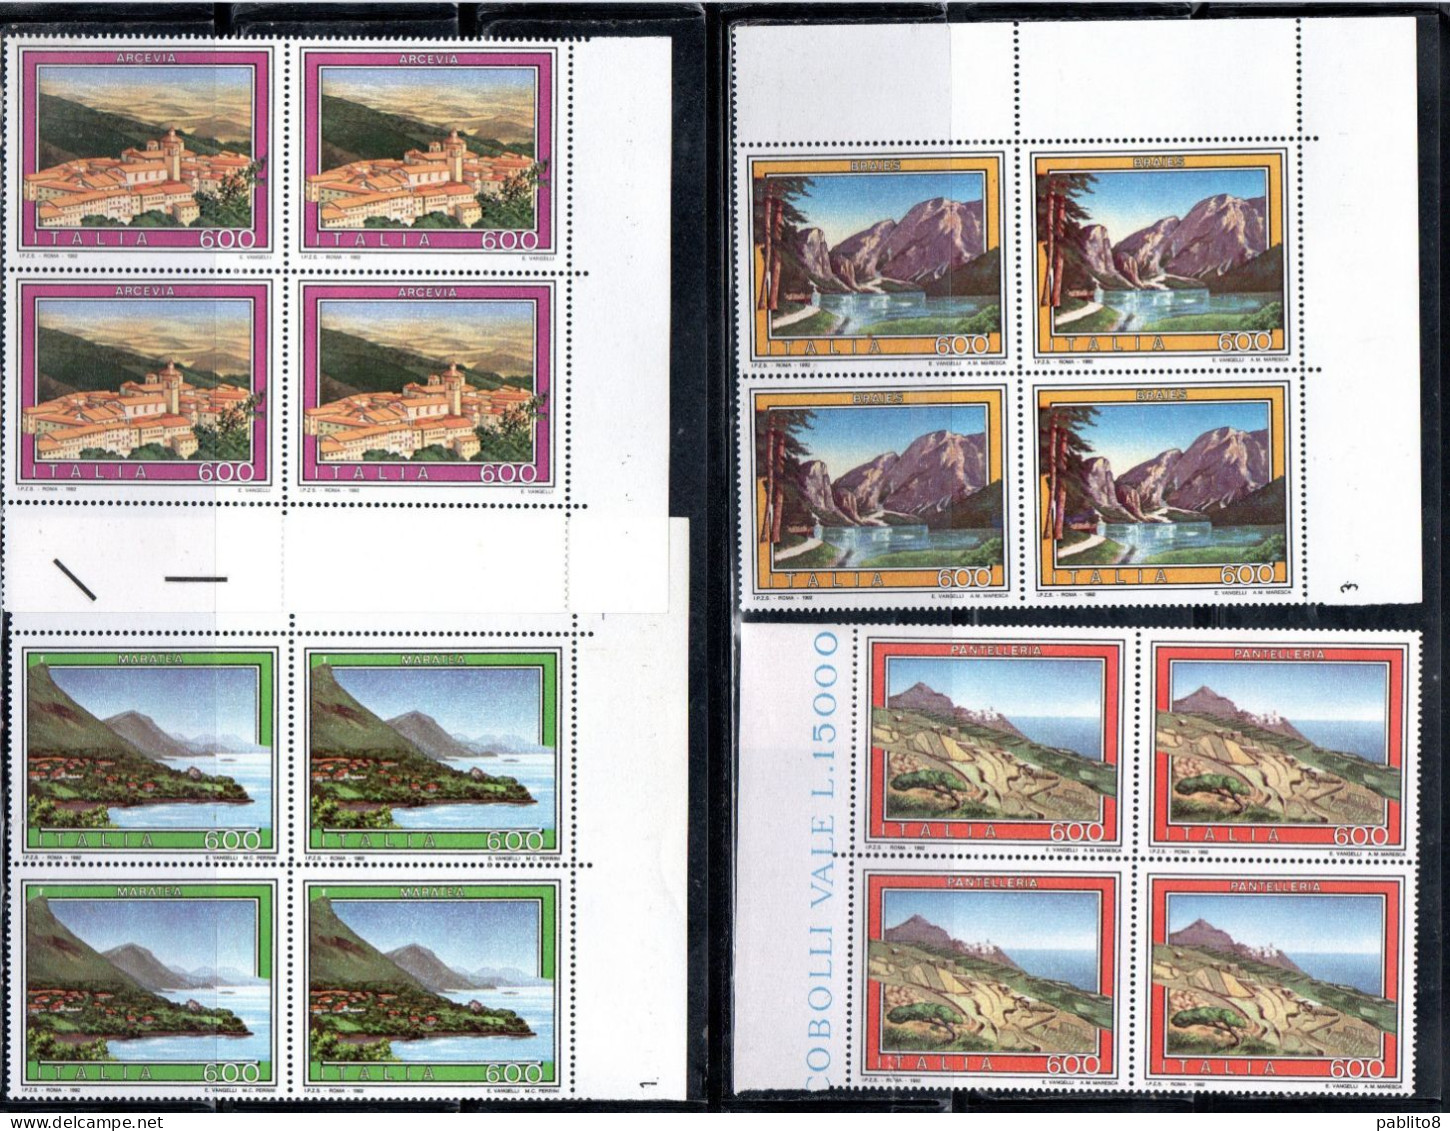 ITALIA REPUBBLICA ITALY REPUBLIC 1992 PROPAGANDA TURISTICA TOURISM SERIE COMPLETA COMPLETE SET QUARTINA BLOCK MNH - 1991-00: Nieuw/plakker